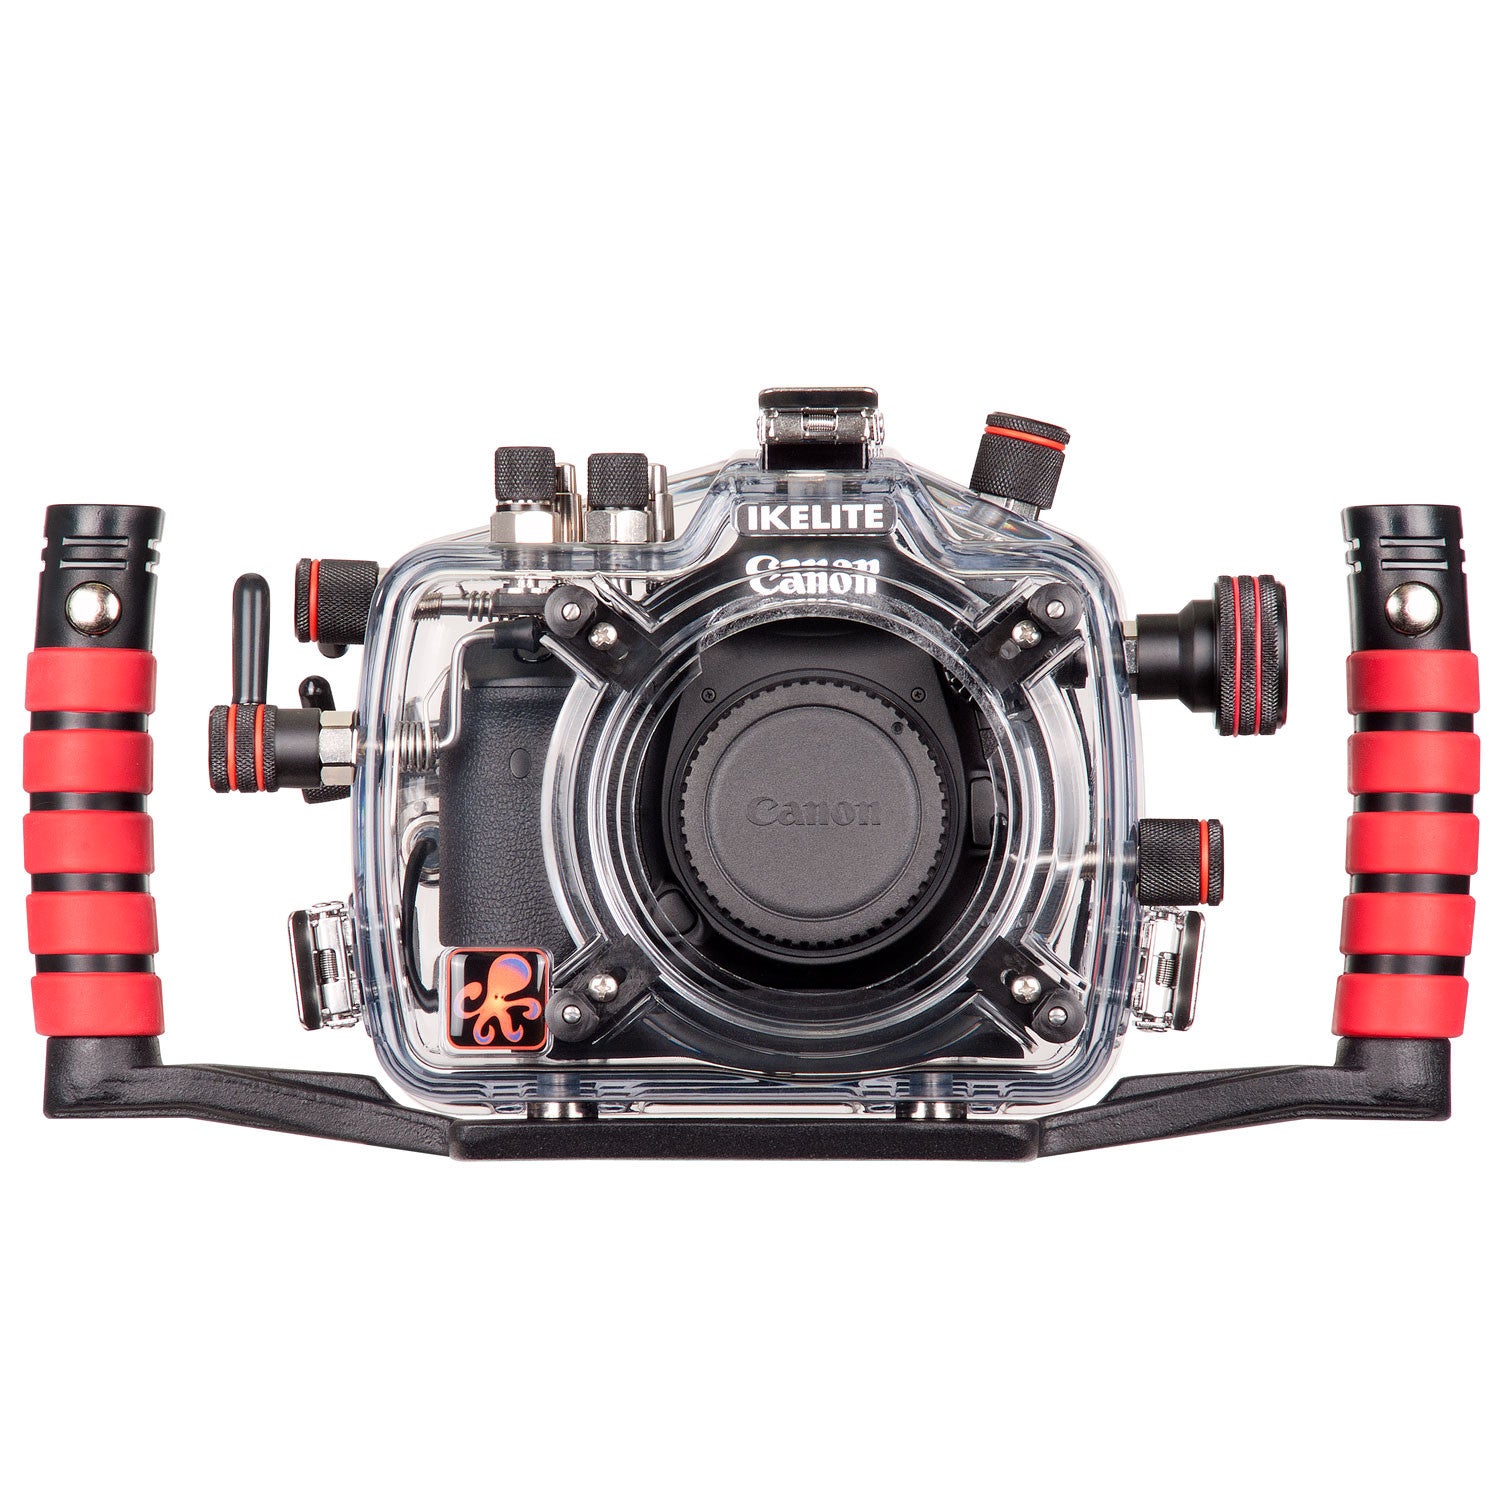 200FL Underwater TTL Housing for Canon EOS 7D Mark II DSLR Cameras